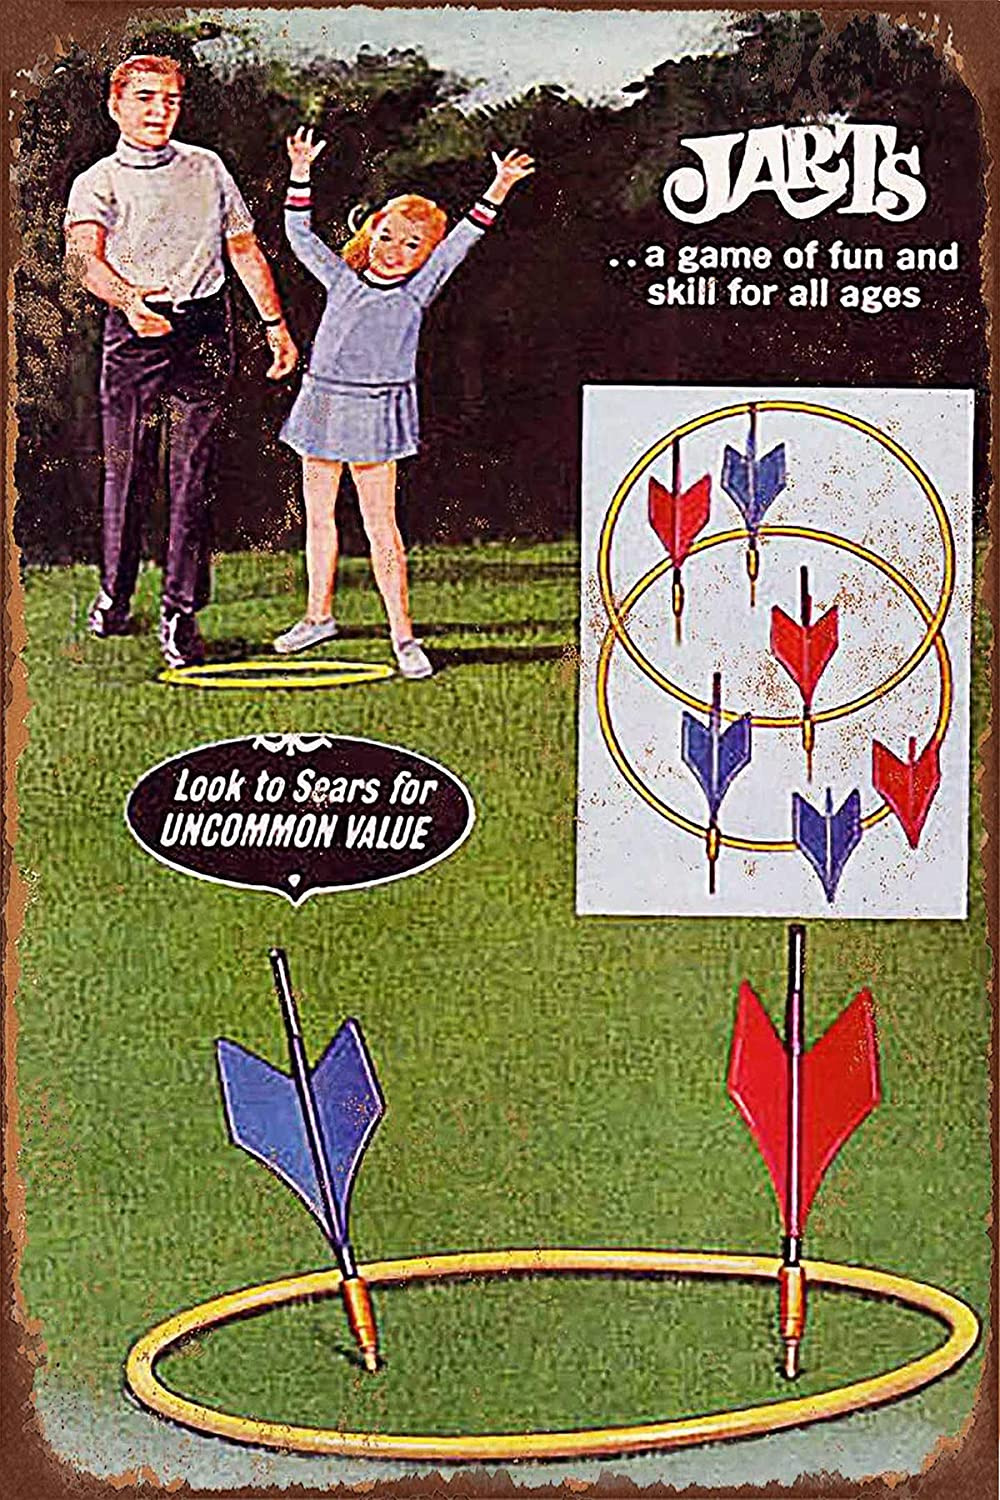 Great Tin Sign Aluminum Metal Sign 1969 Jarts Lawn Darts Game Vintage Look 8X12 